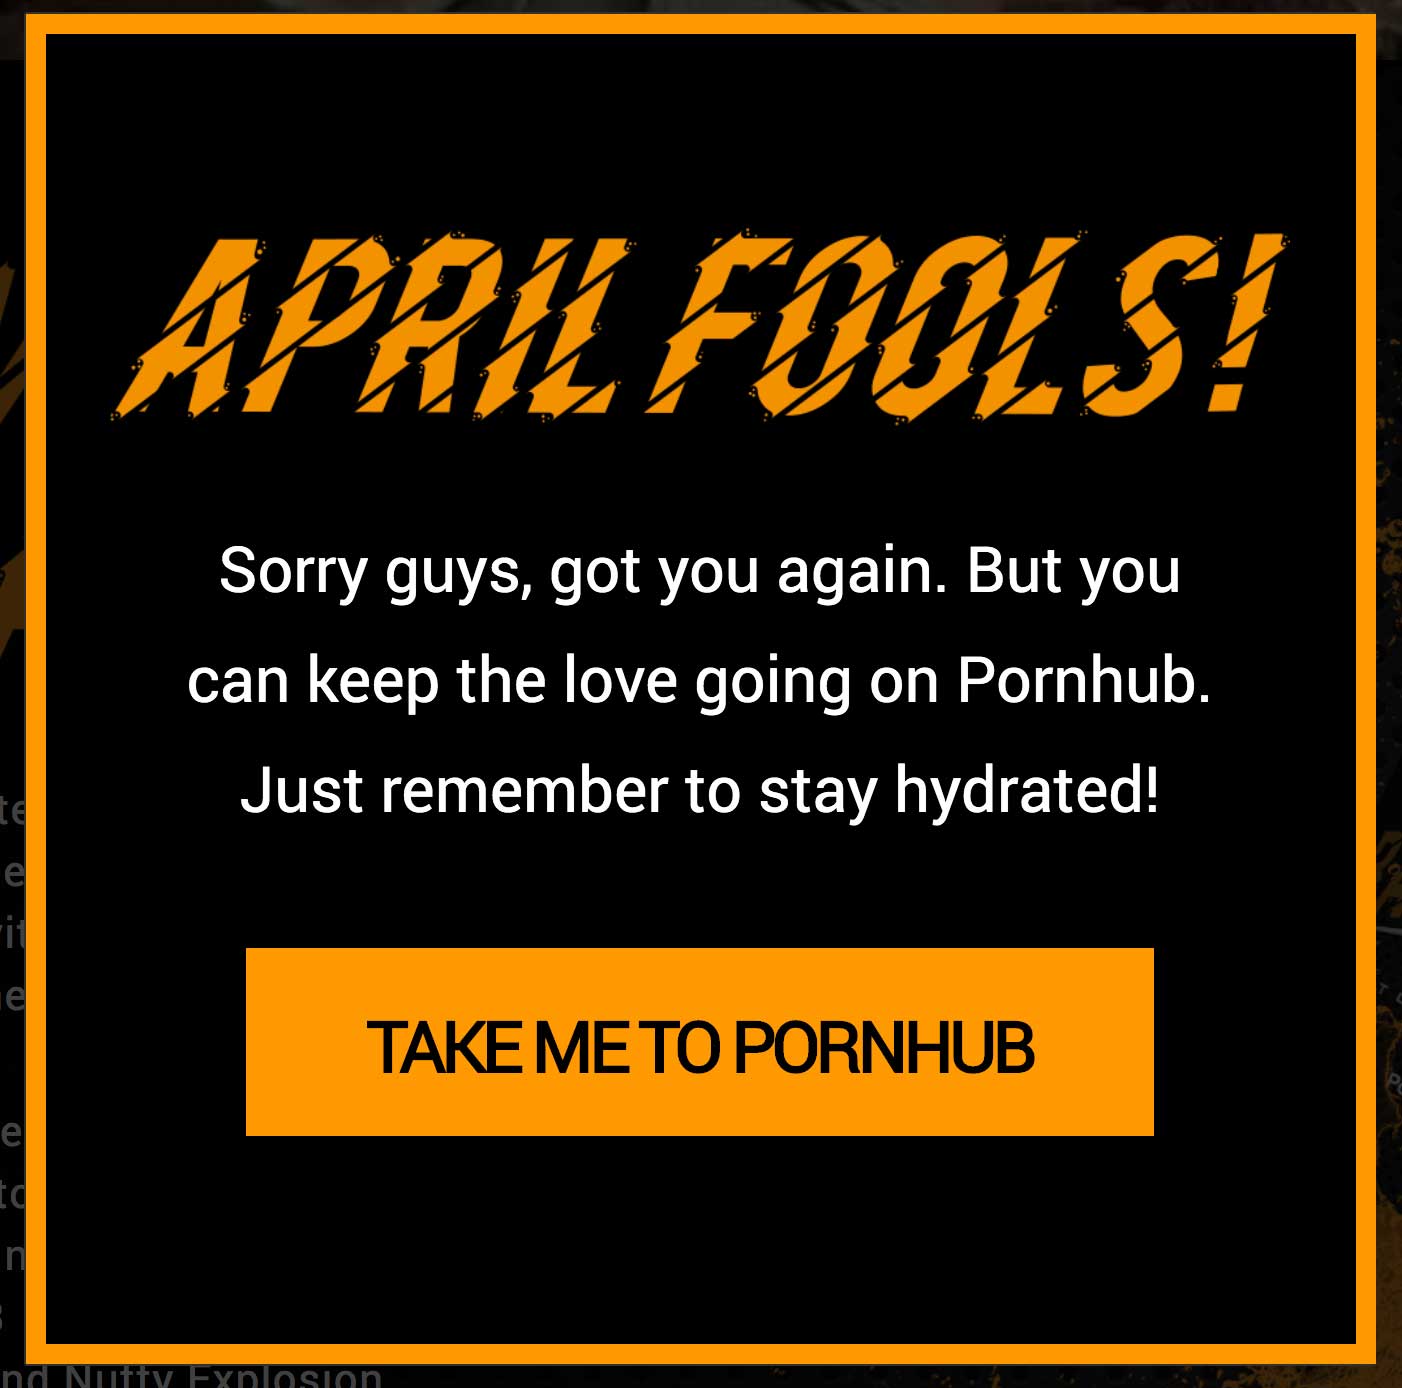 I migliori pesce d'aprile nel marketing: da Pornhub a Nvidia